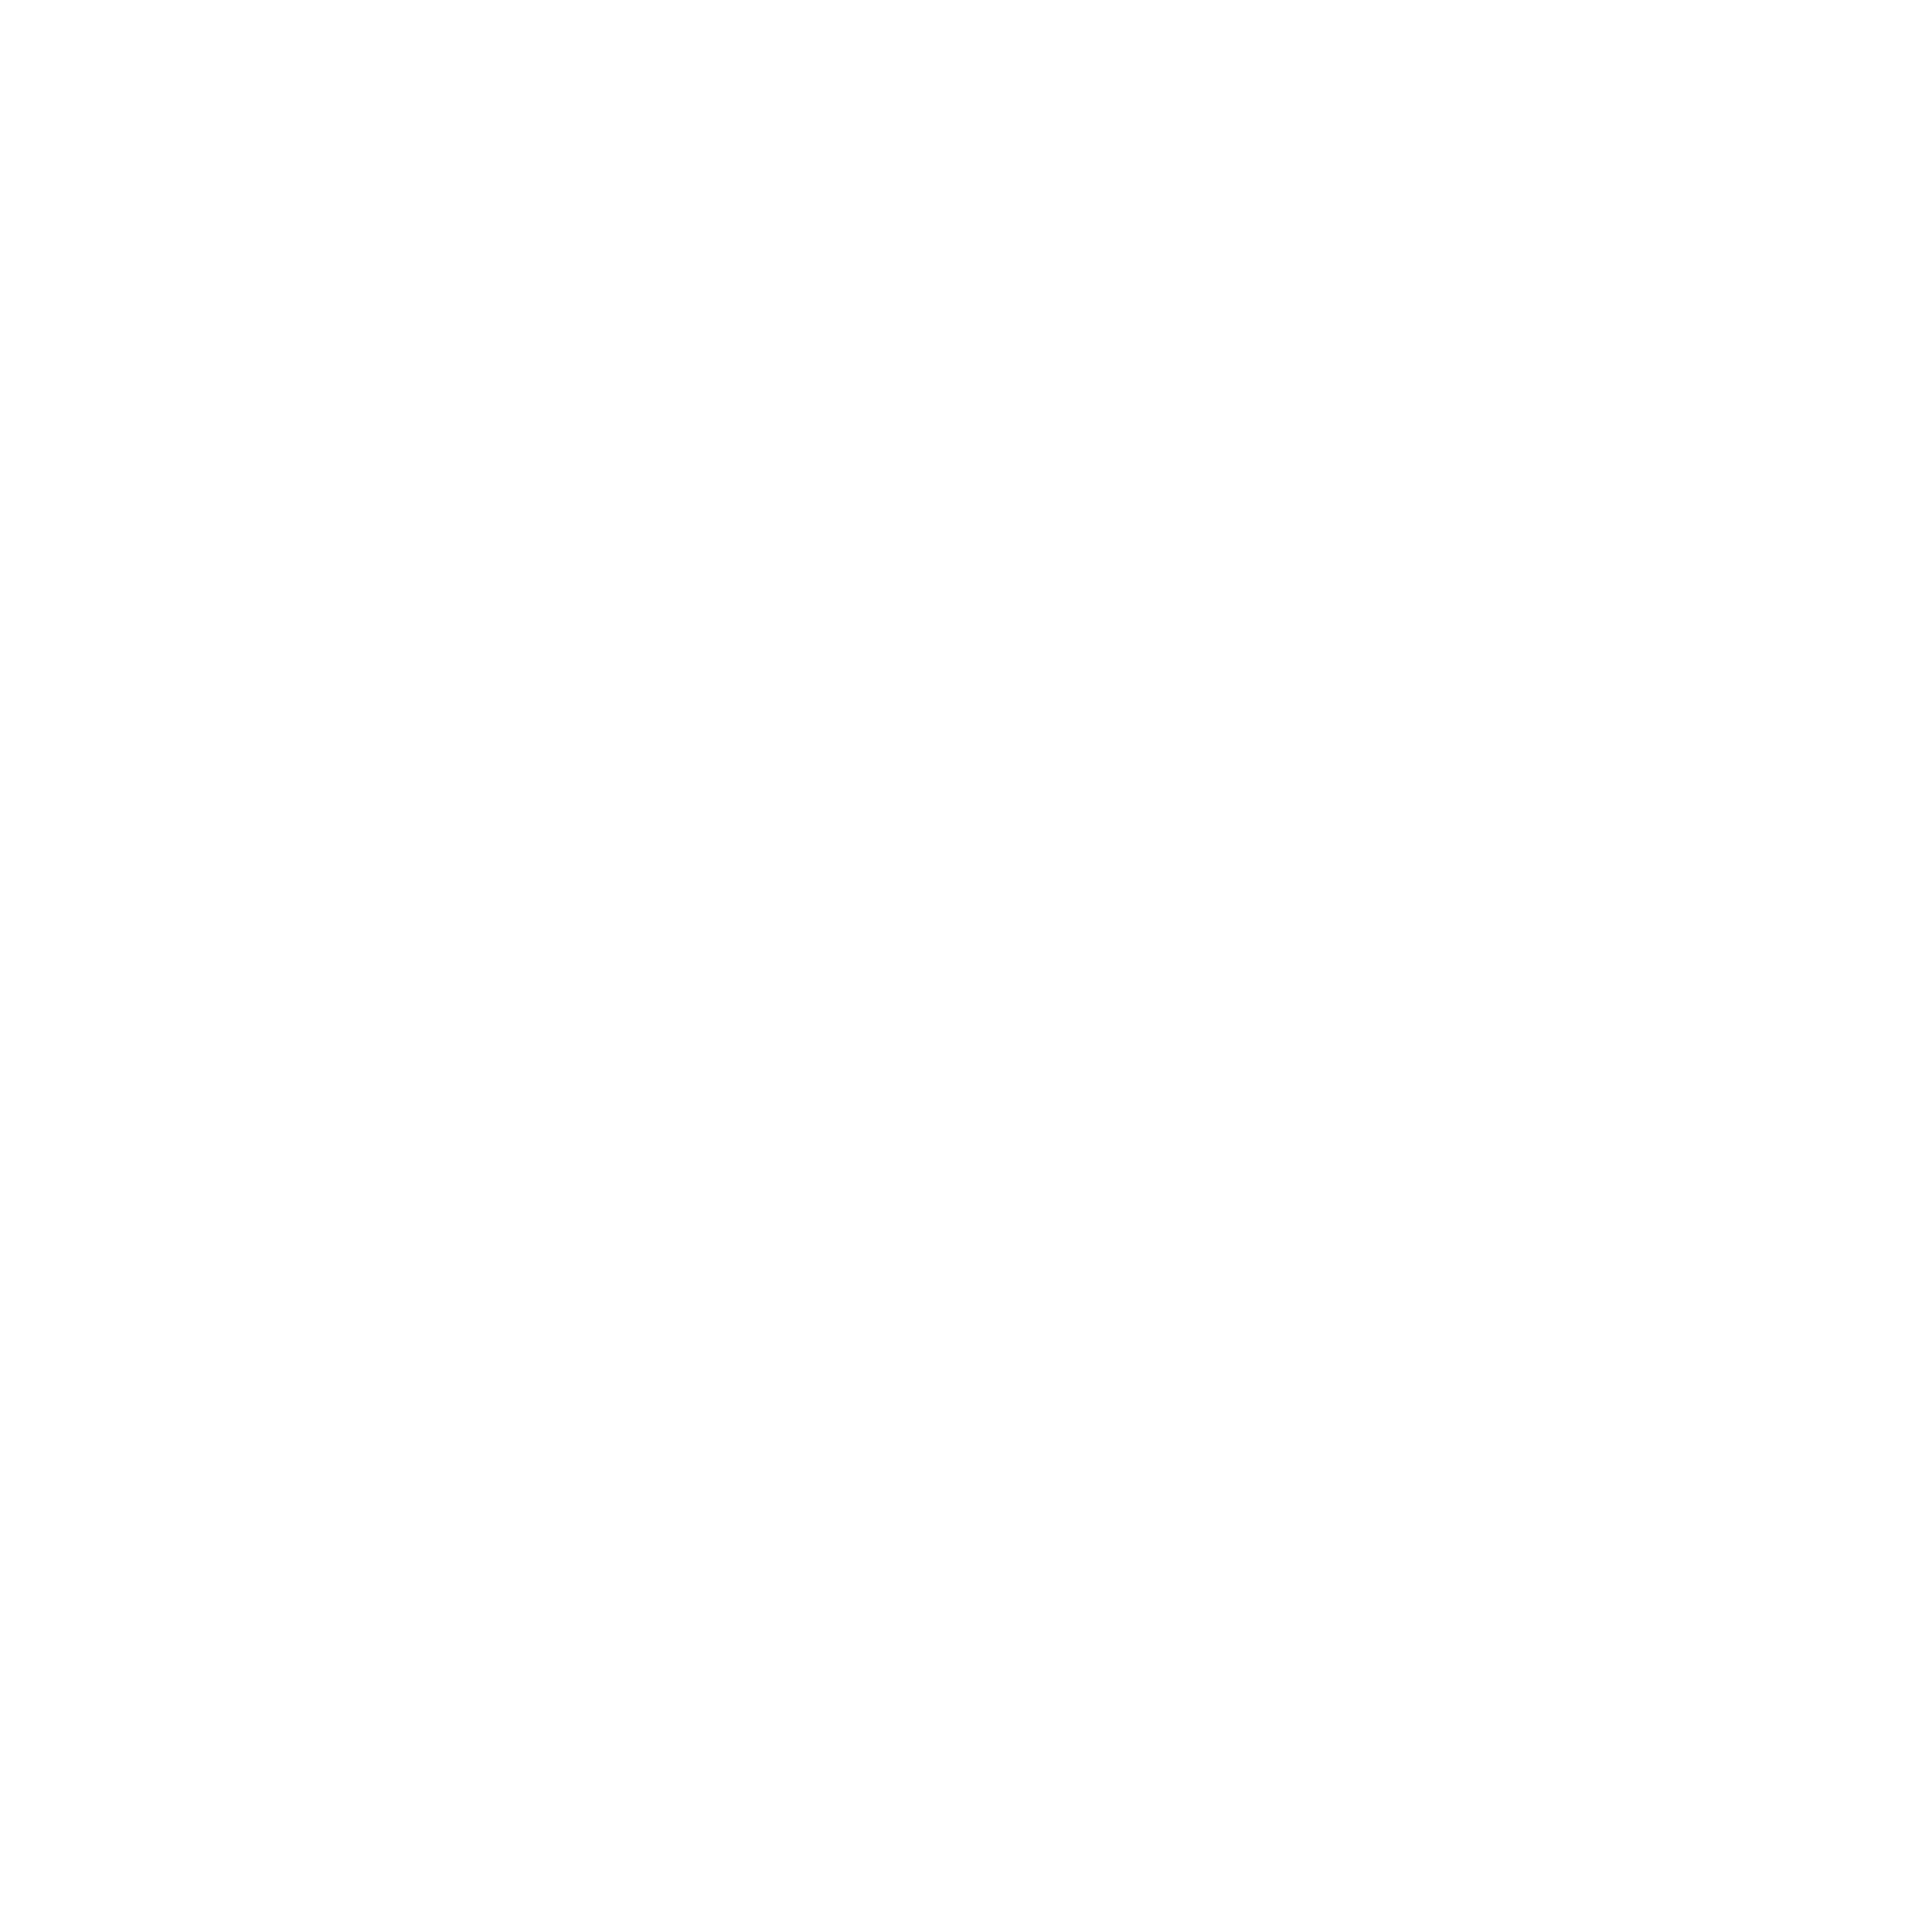 Kansas City Royals Scores, Stats and Highlights - ESPN